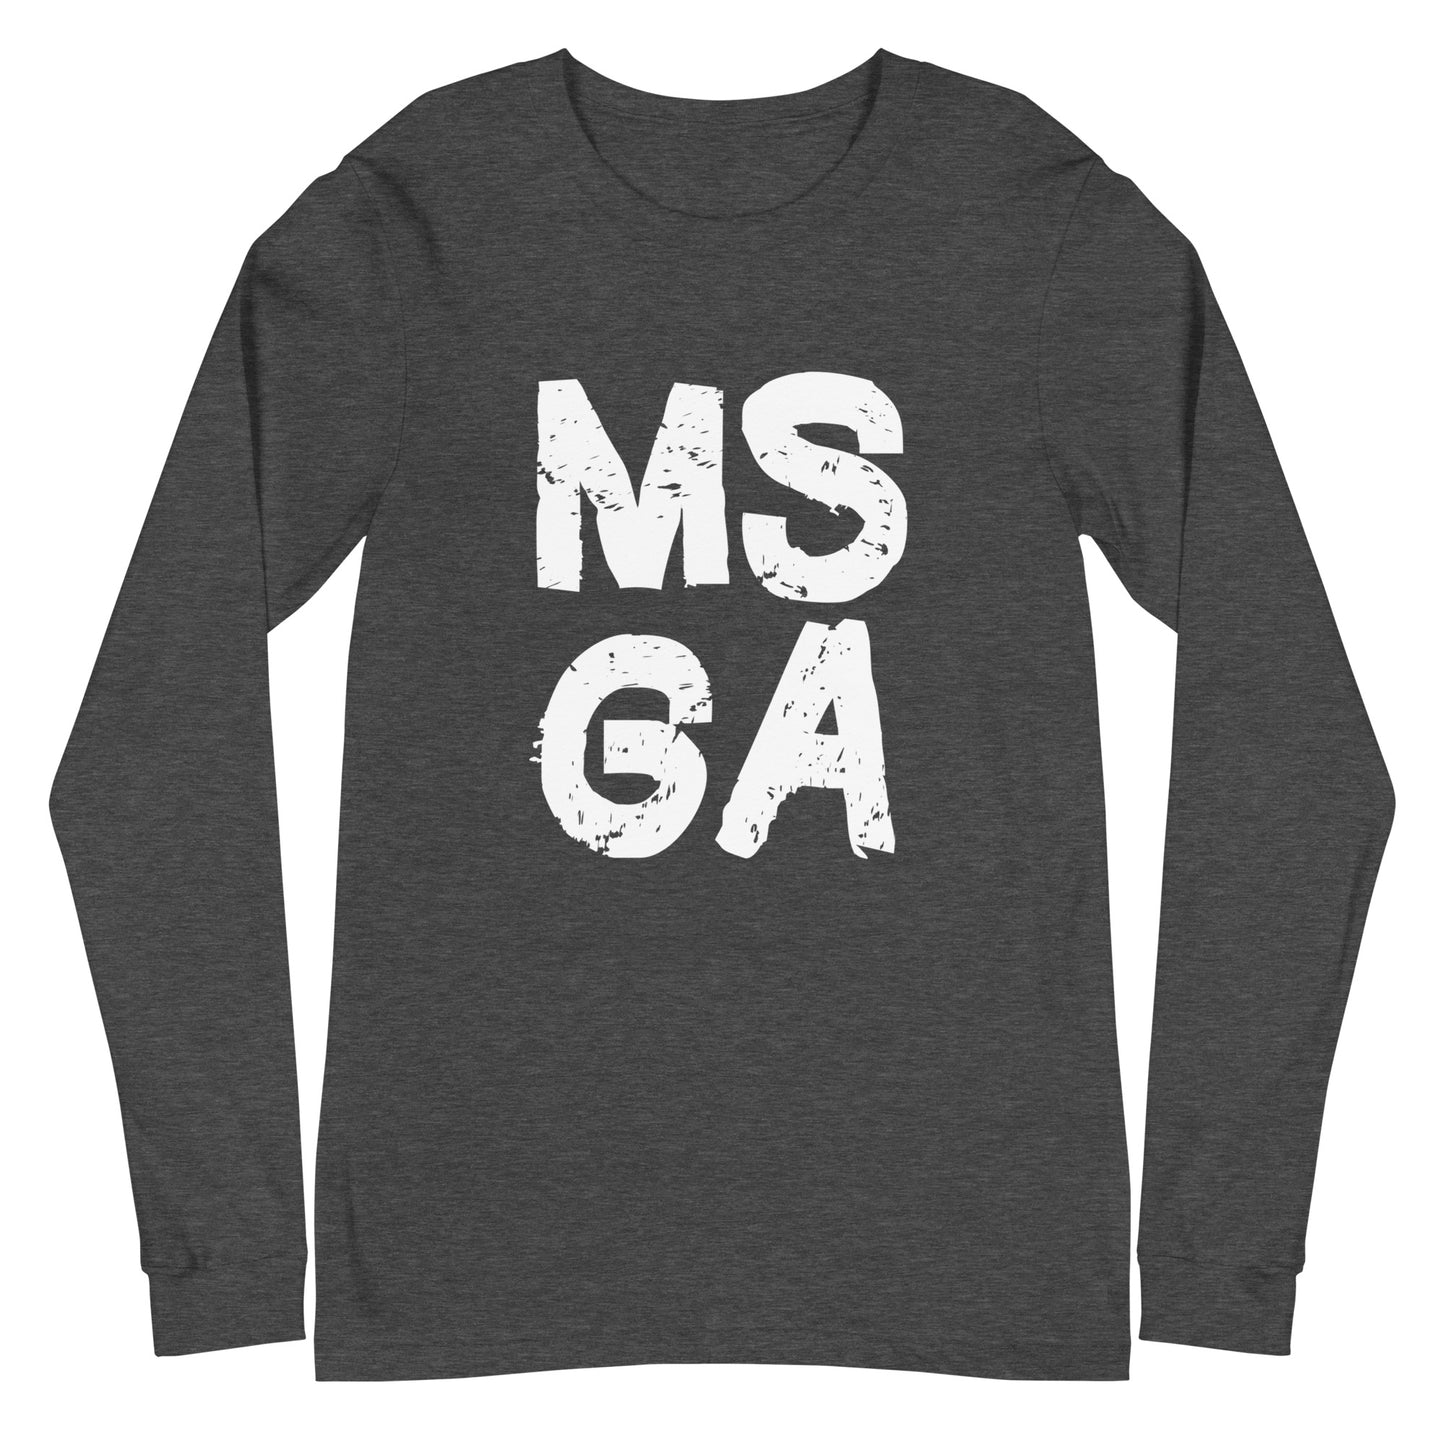 MSGA Surveillance Camera Long Sleeve T-shirt - Make Snitching Great Again